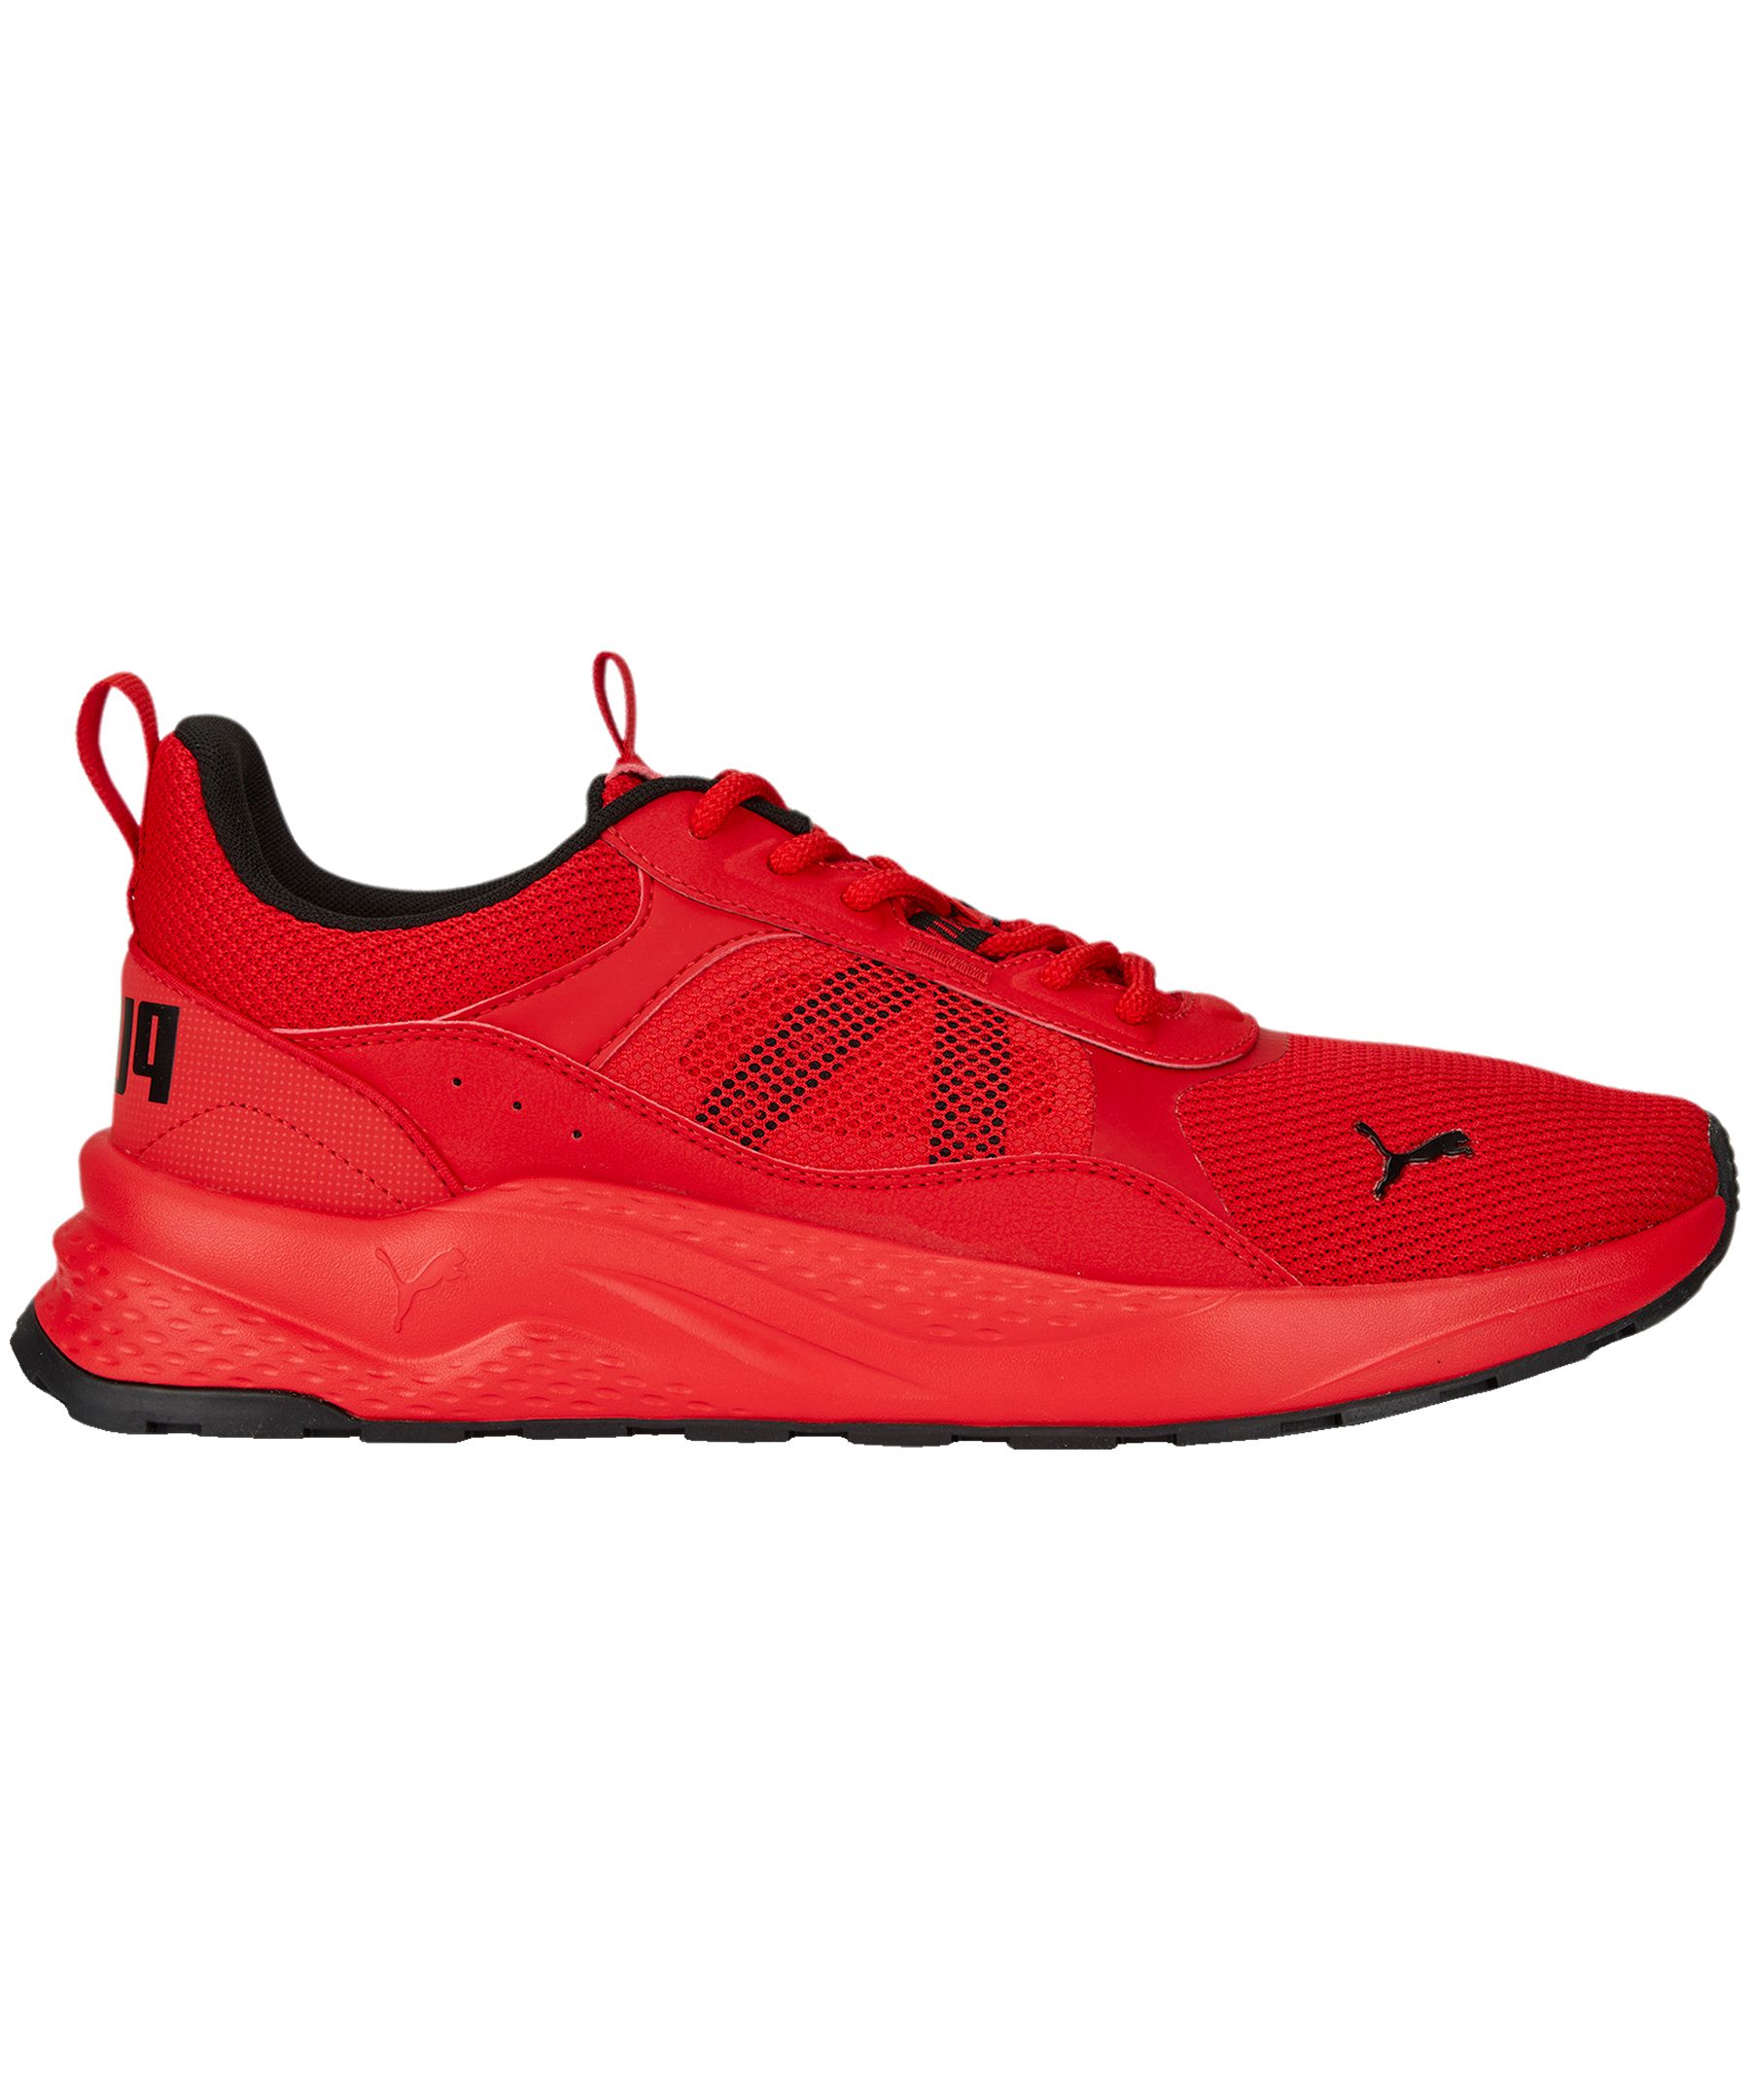 Mark's has Men's Anzarun 2.0 Sneakers - Red